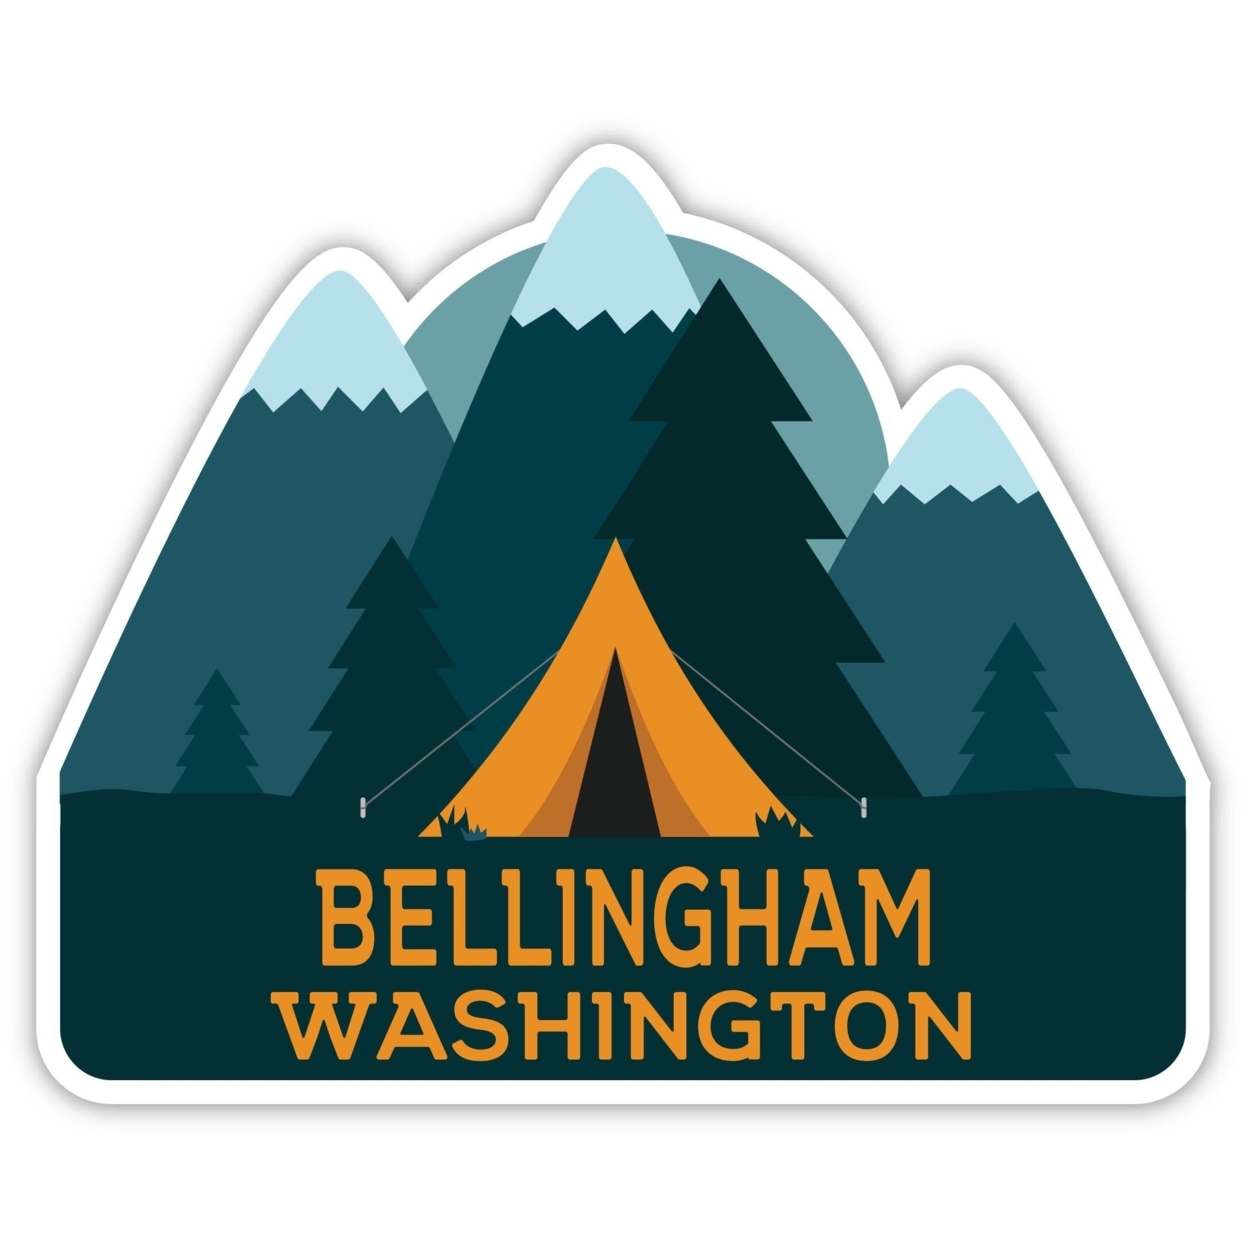 Bellingham Washington Souvenir Decorative Stickers (Choose Theme And Size) - 4-Pack, 4-Inch, Adventures Awaits